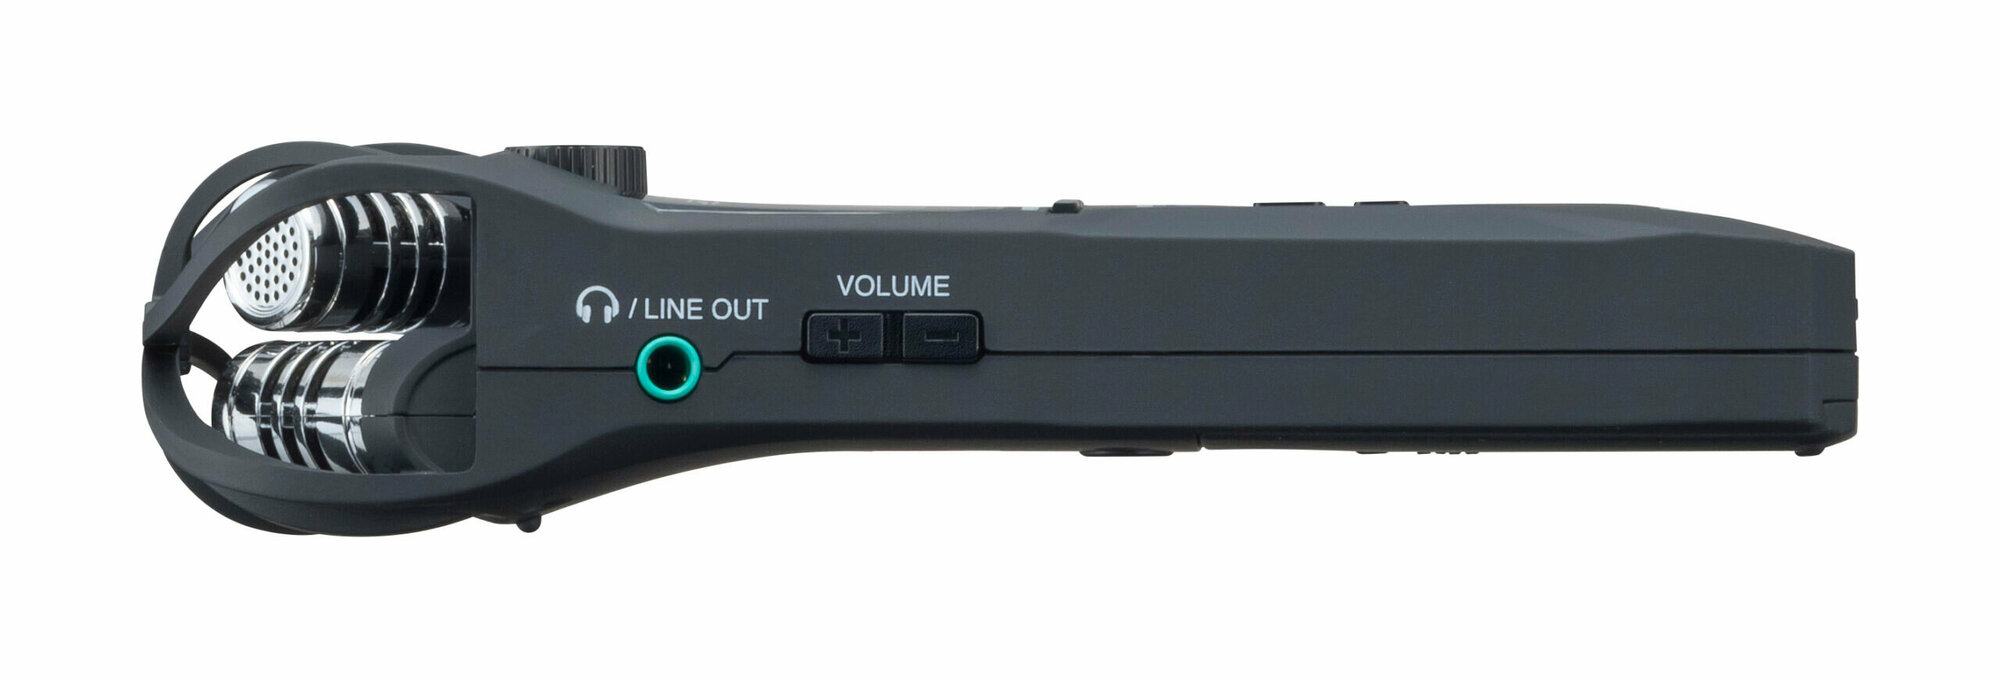 Zoom H1n-VP Портативный рекордер с набором аксессуаров